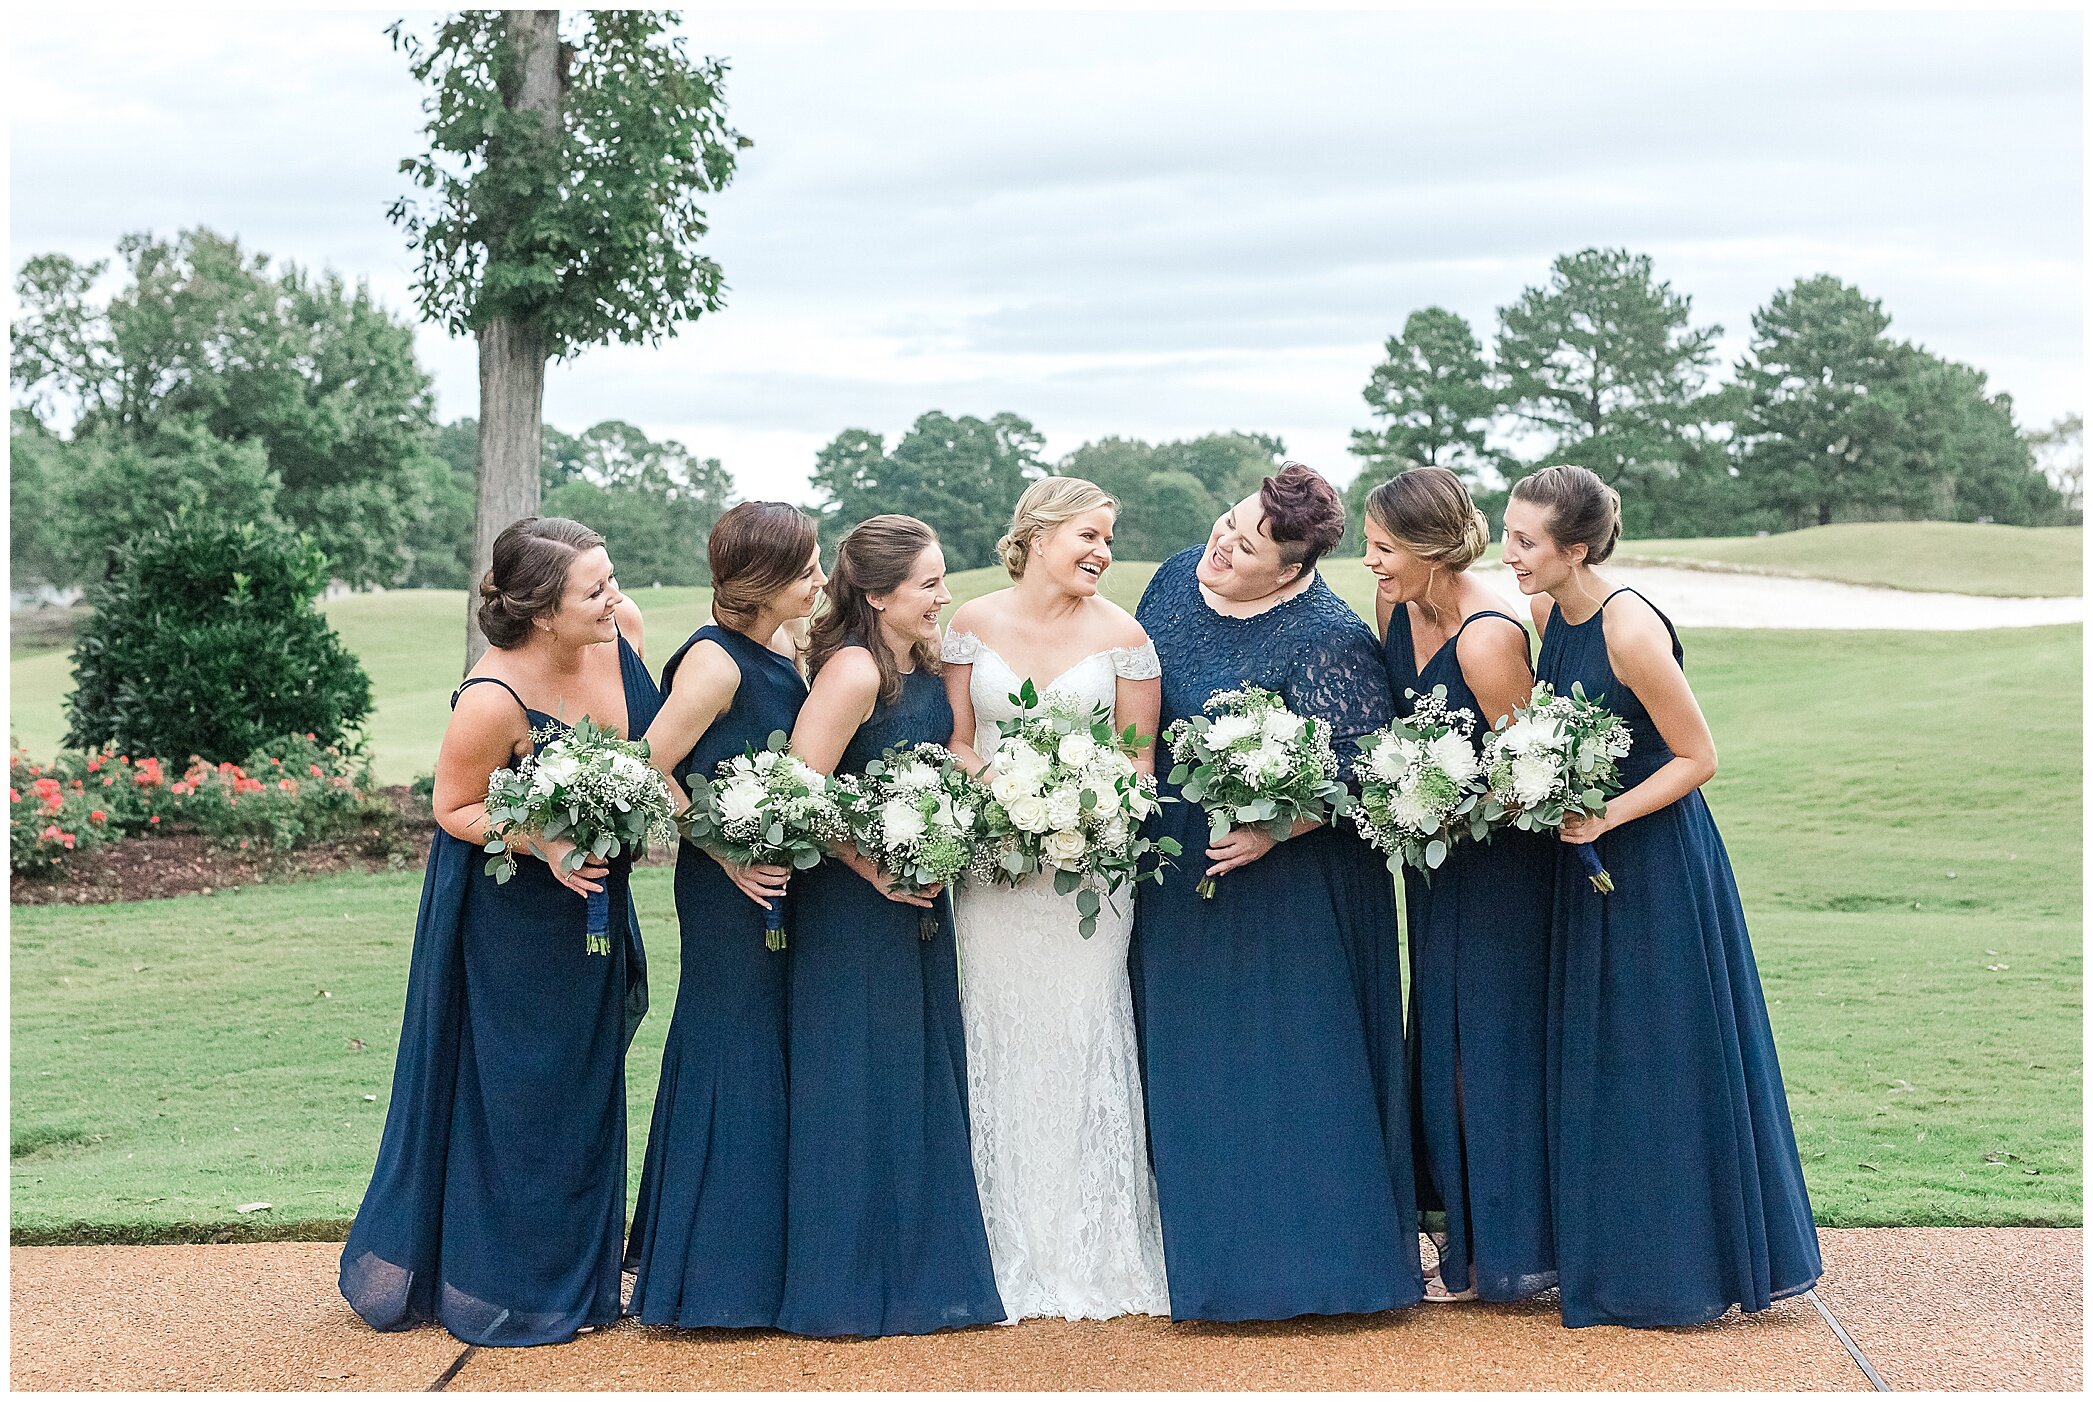 Kiln Creek Golf Club and Resort wedding photos of bride with bridesmaids